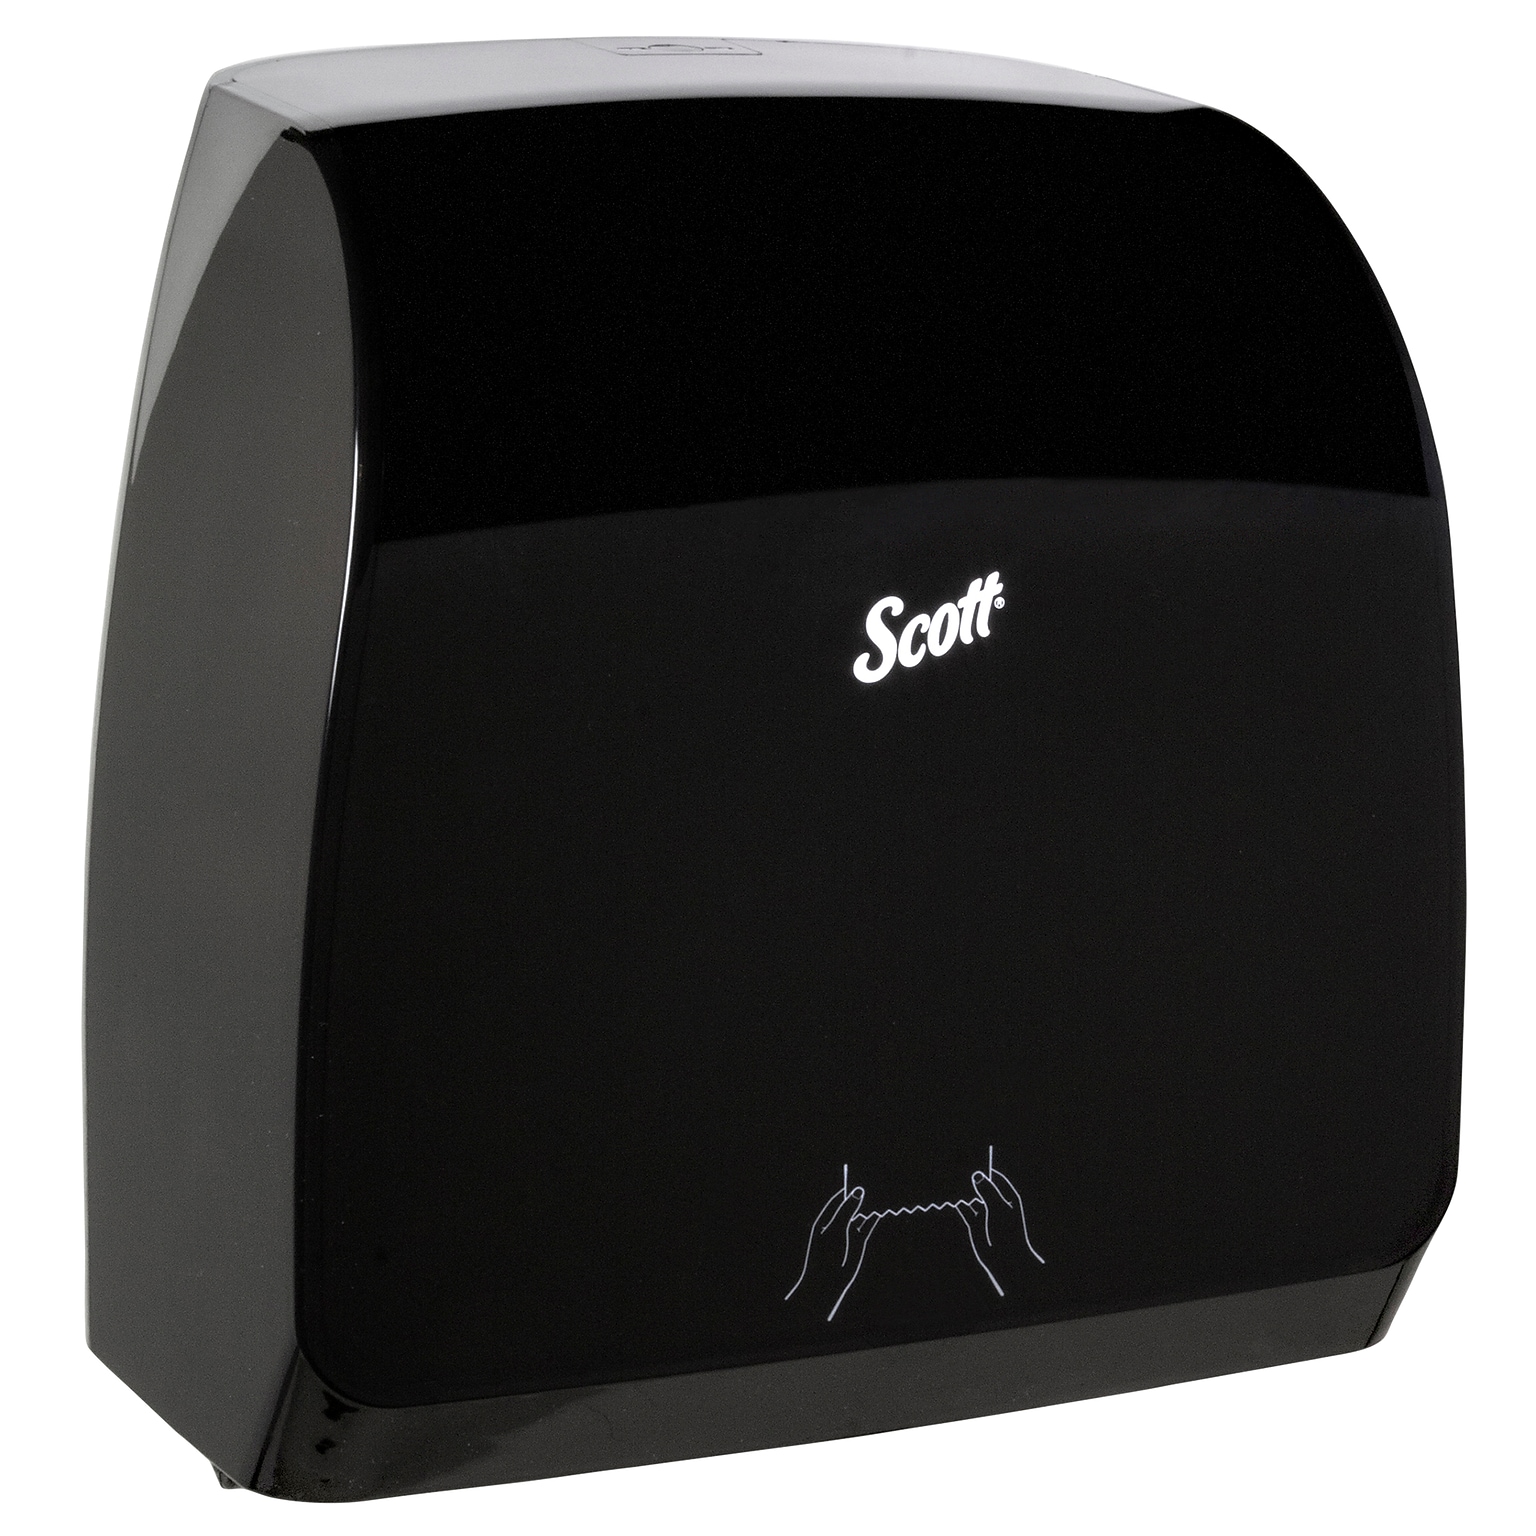 Scott Hardwound Paper Towel Dispenser, Black (47089)